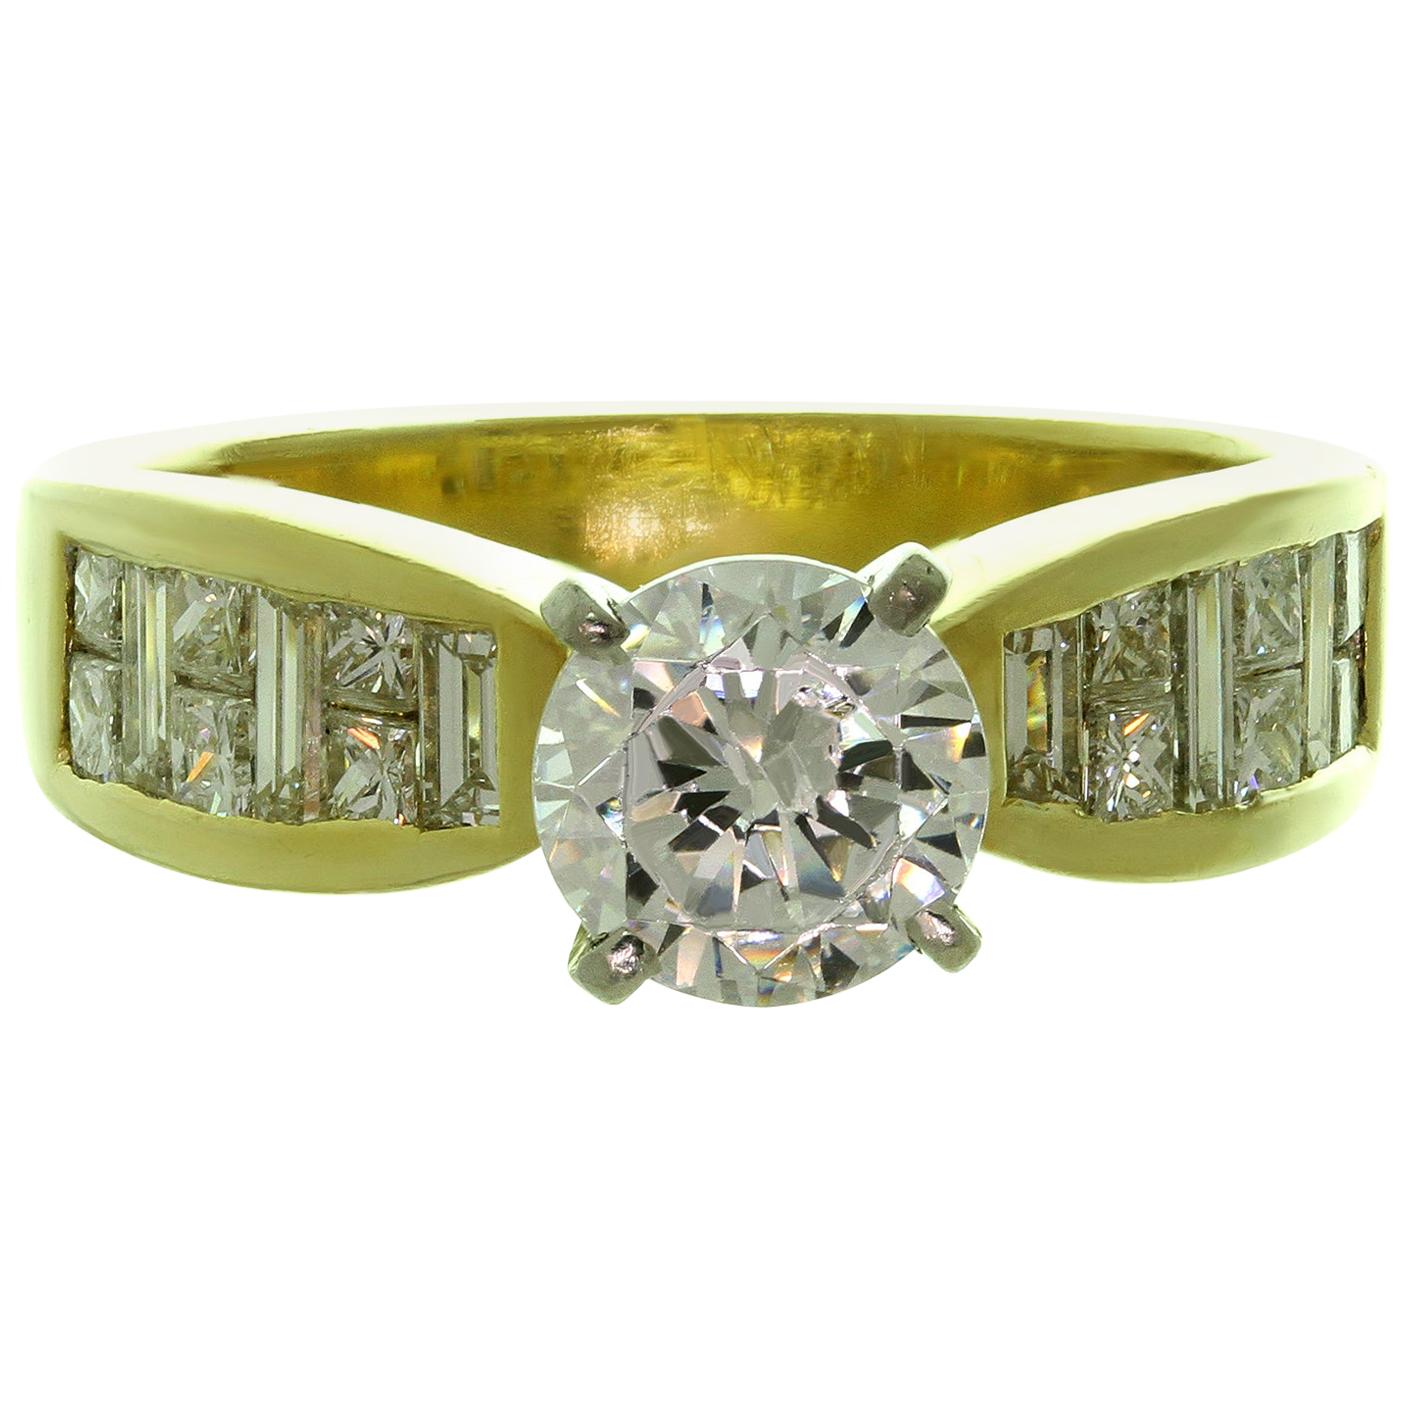 Fancy-Cut Diamond Zircon Yellow Gold Engagement Ring